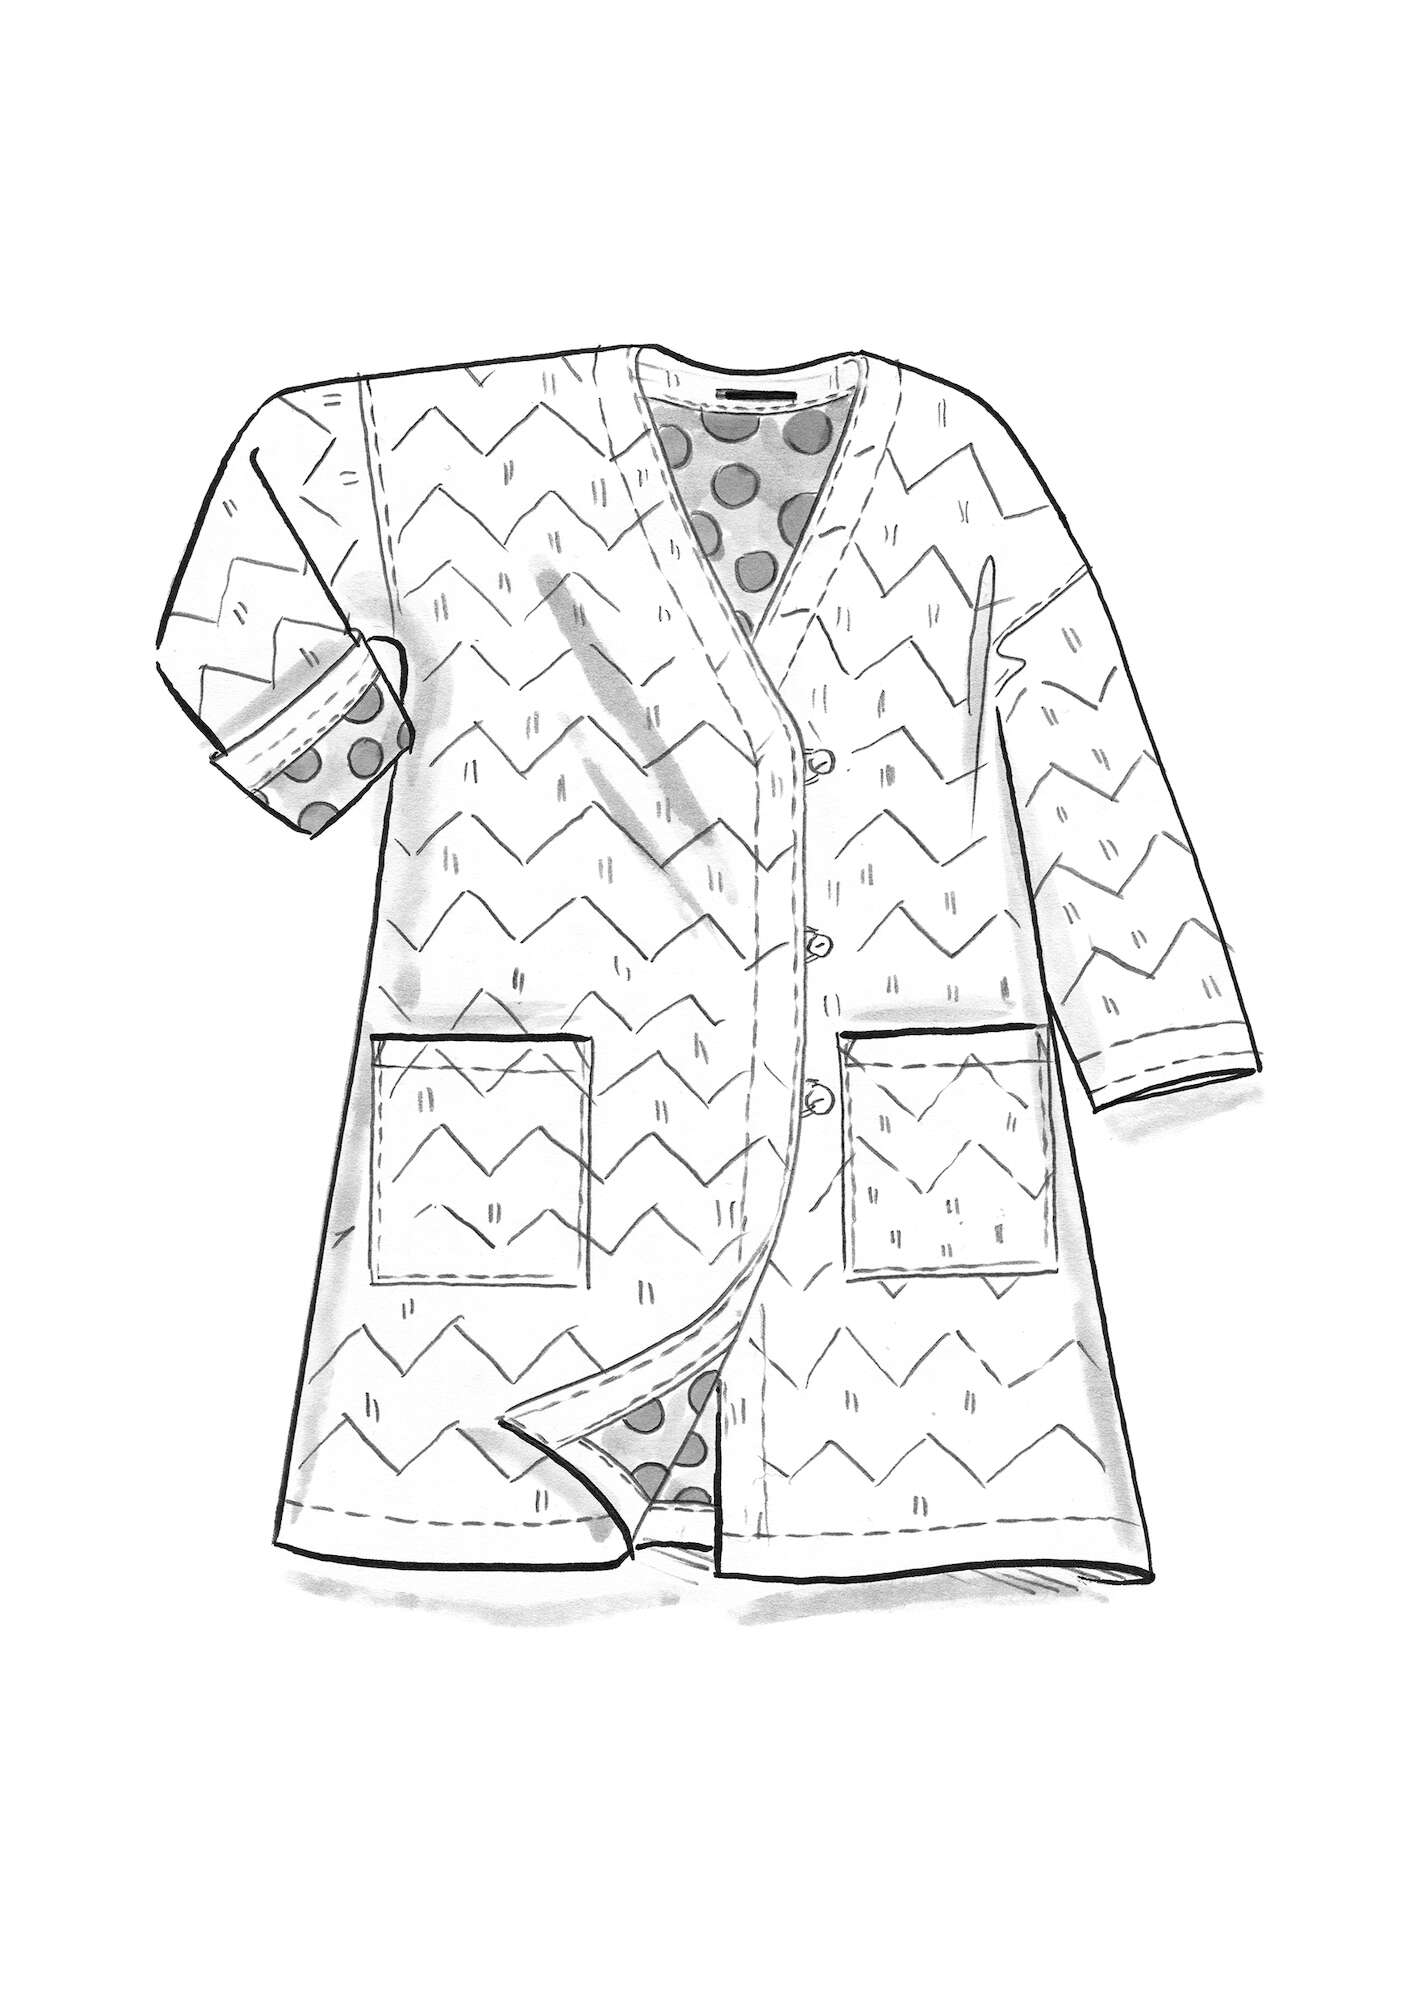 “Kimono” quilted coat in organic cotton/linen indigo